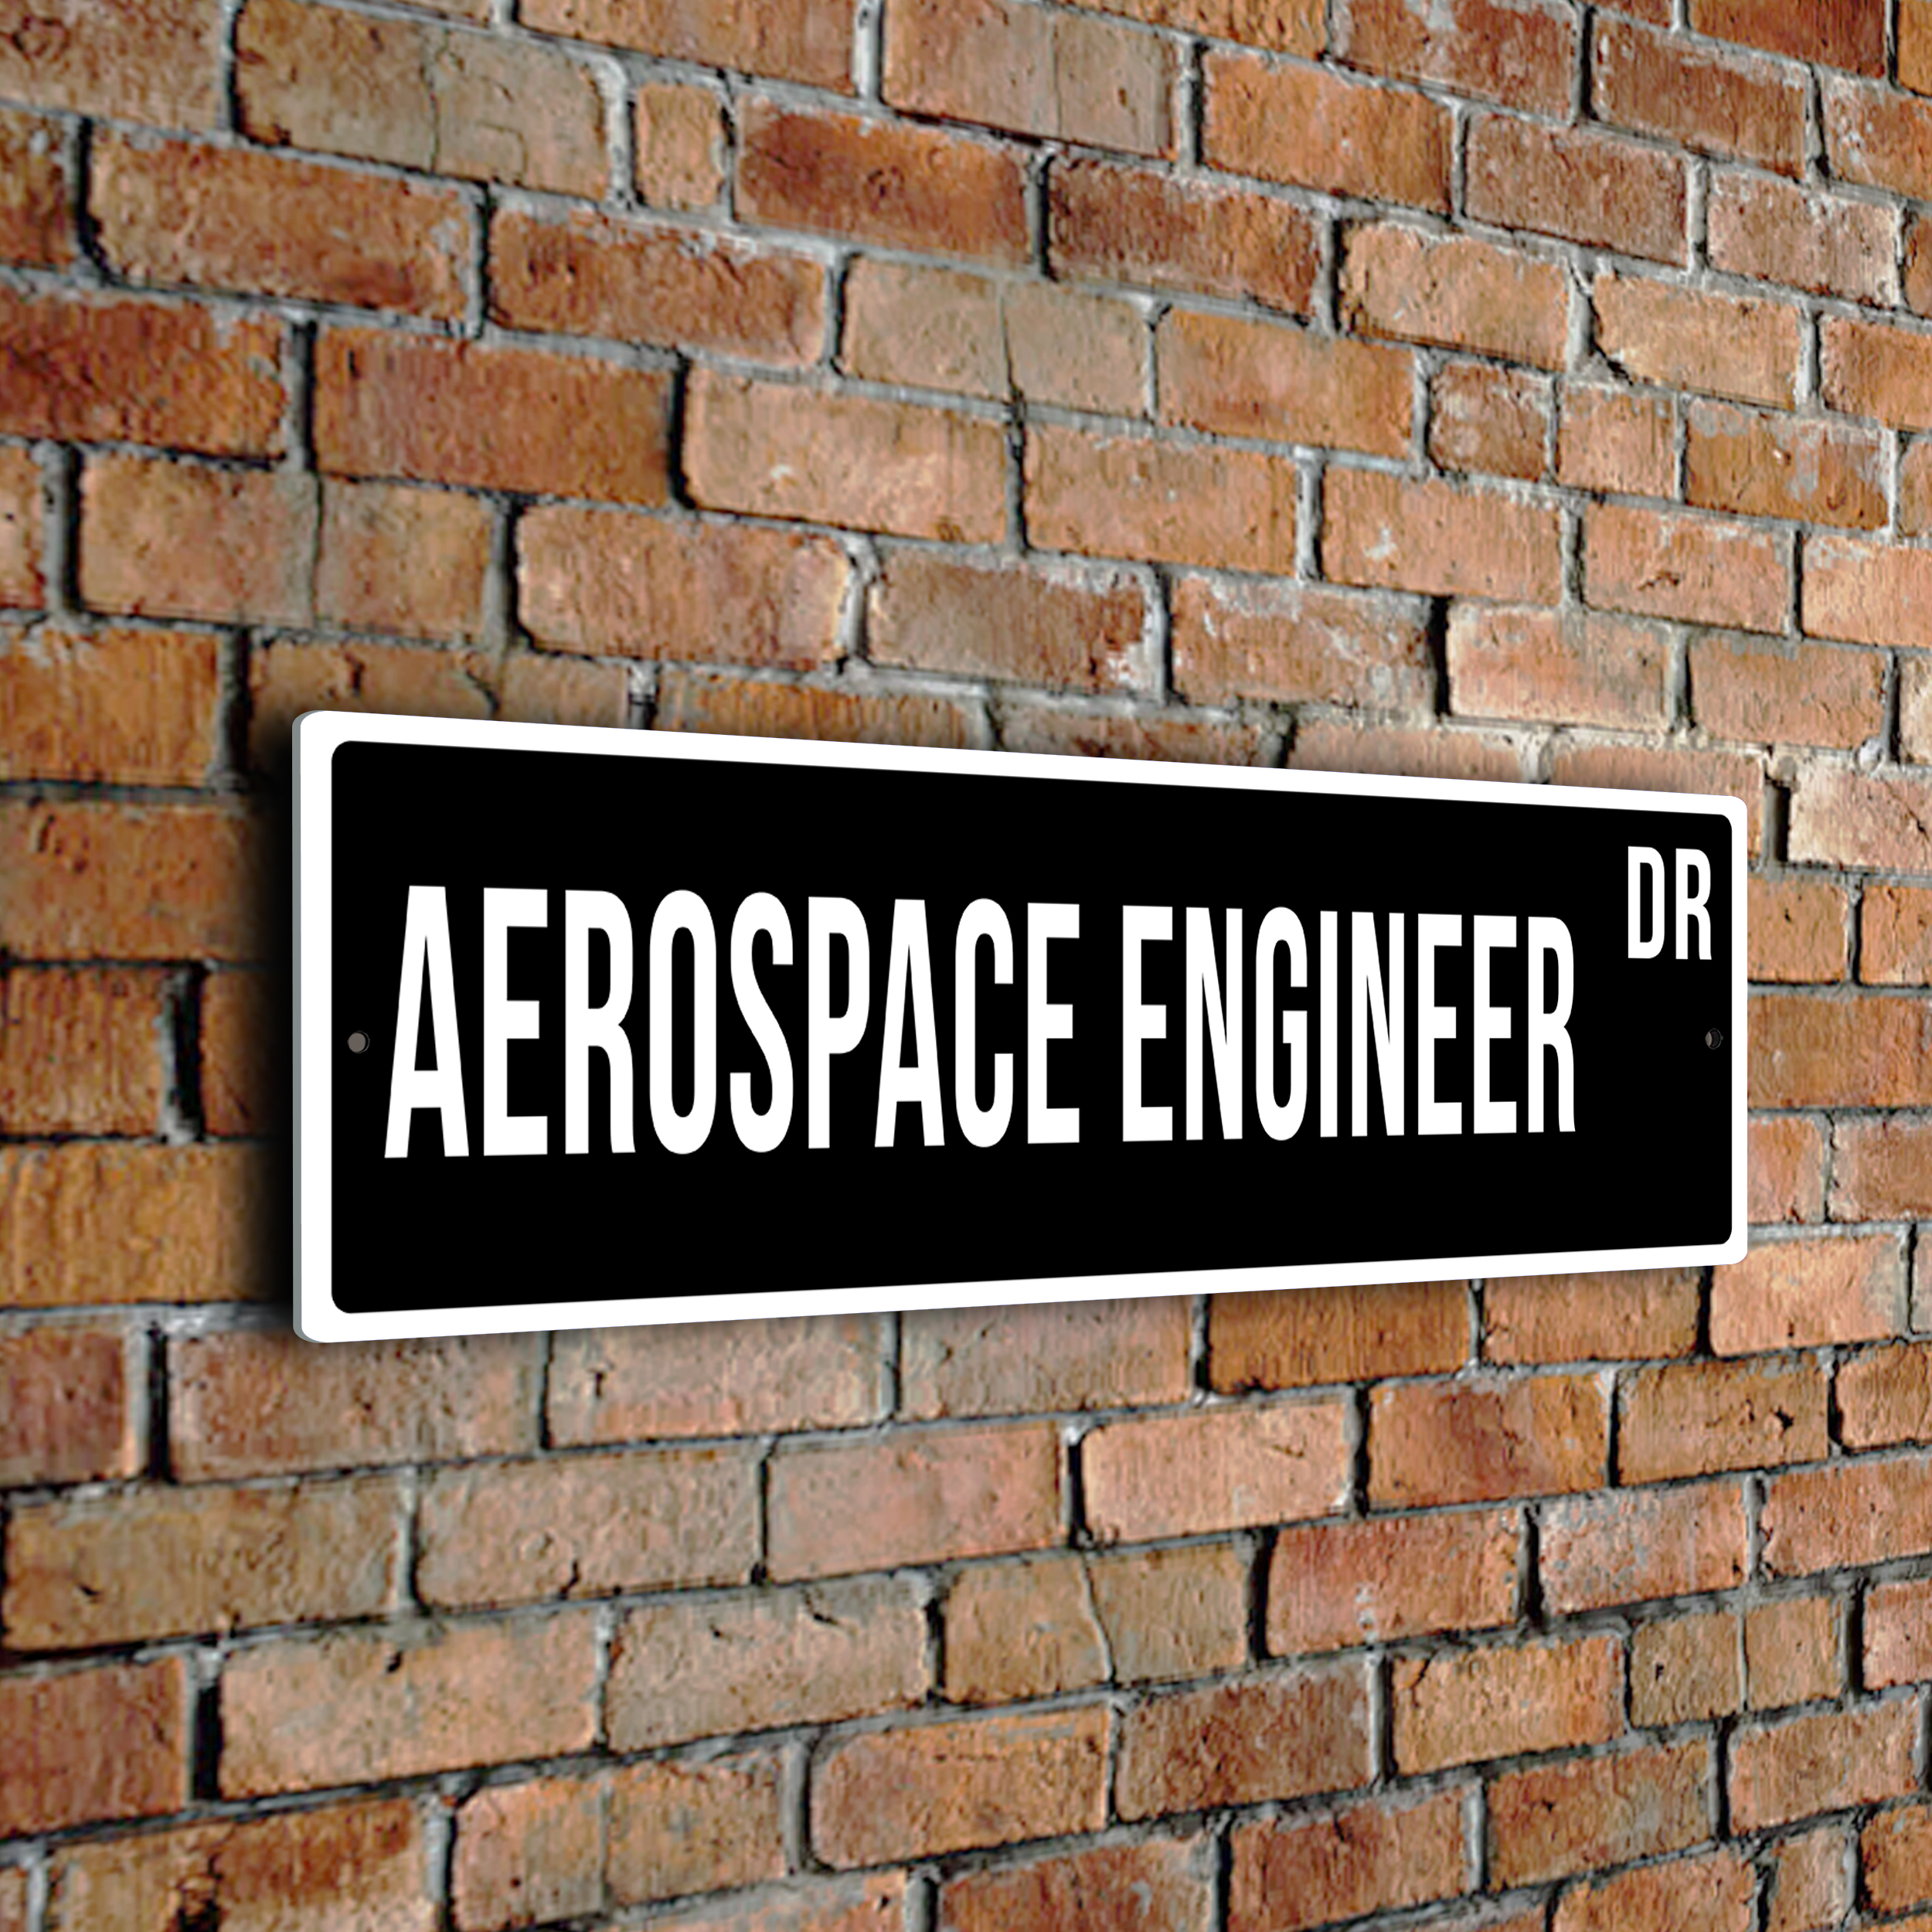 Aerospace Engineer street sign